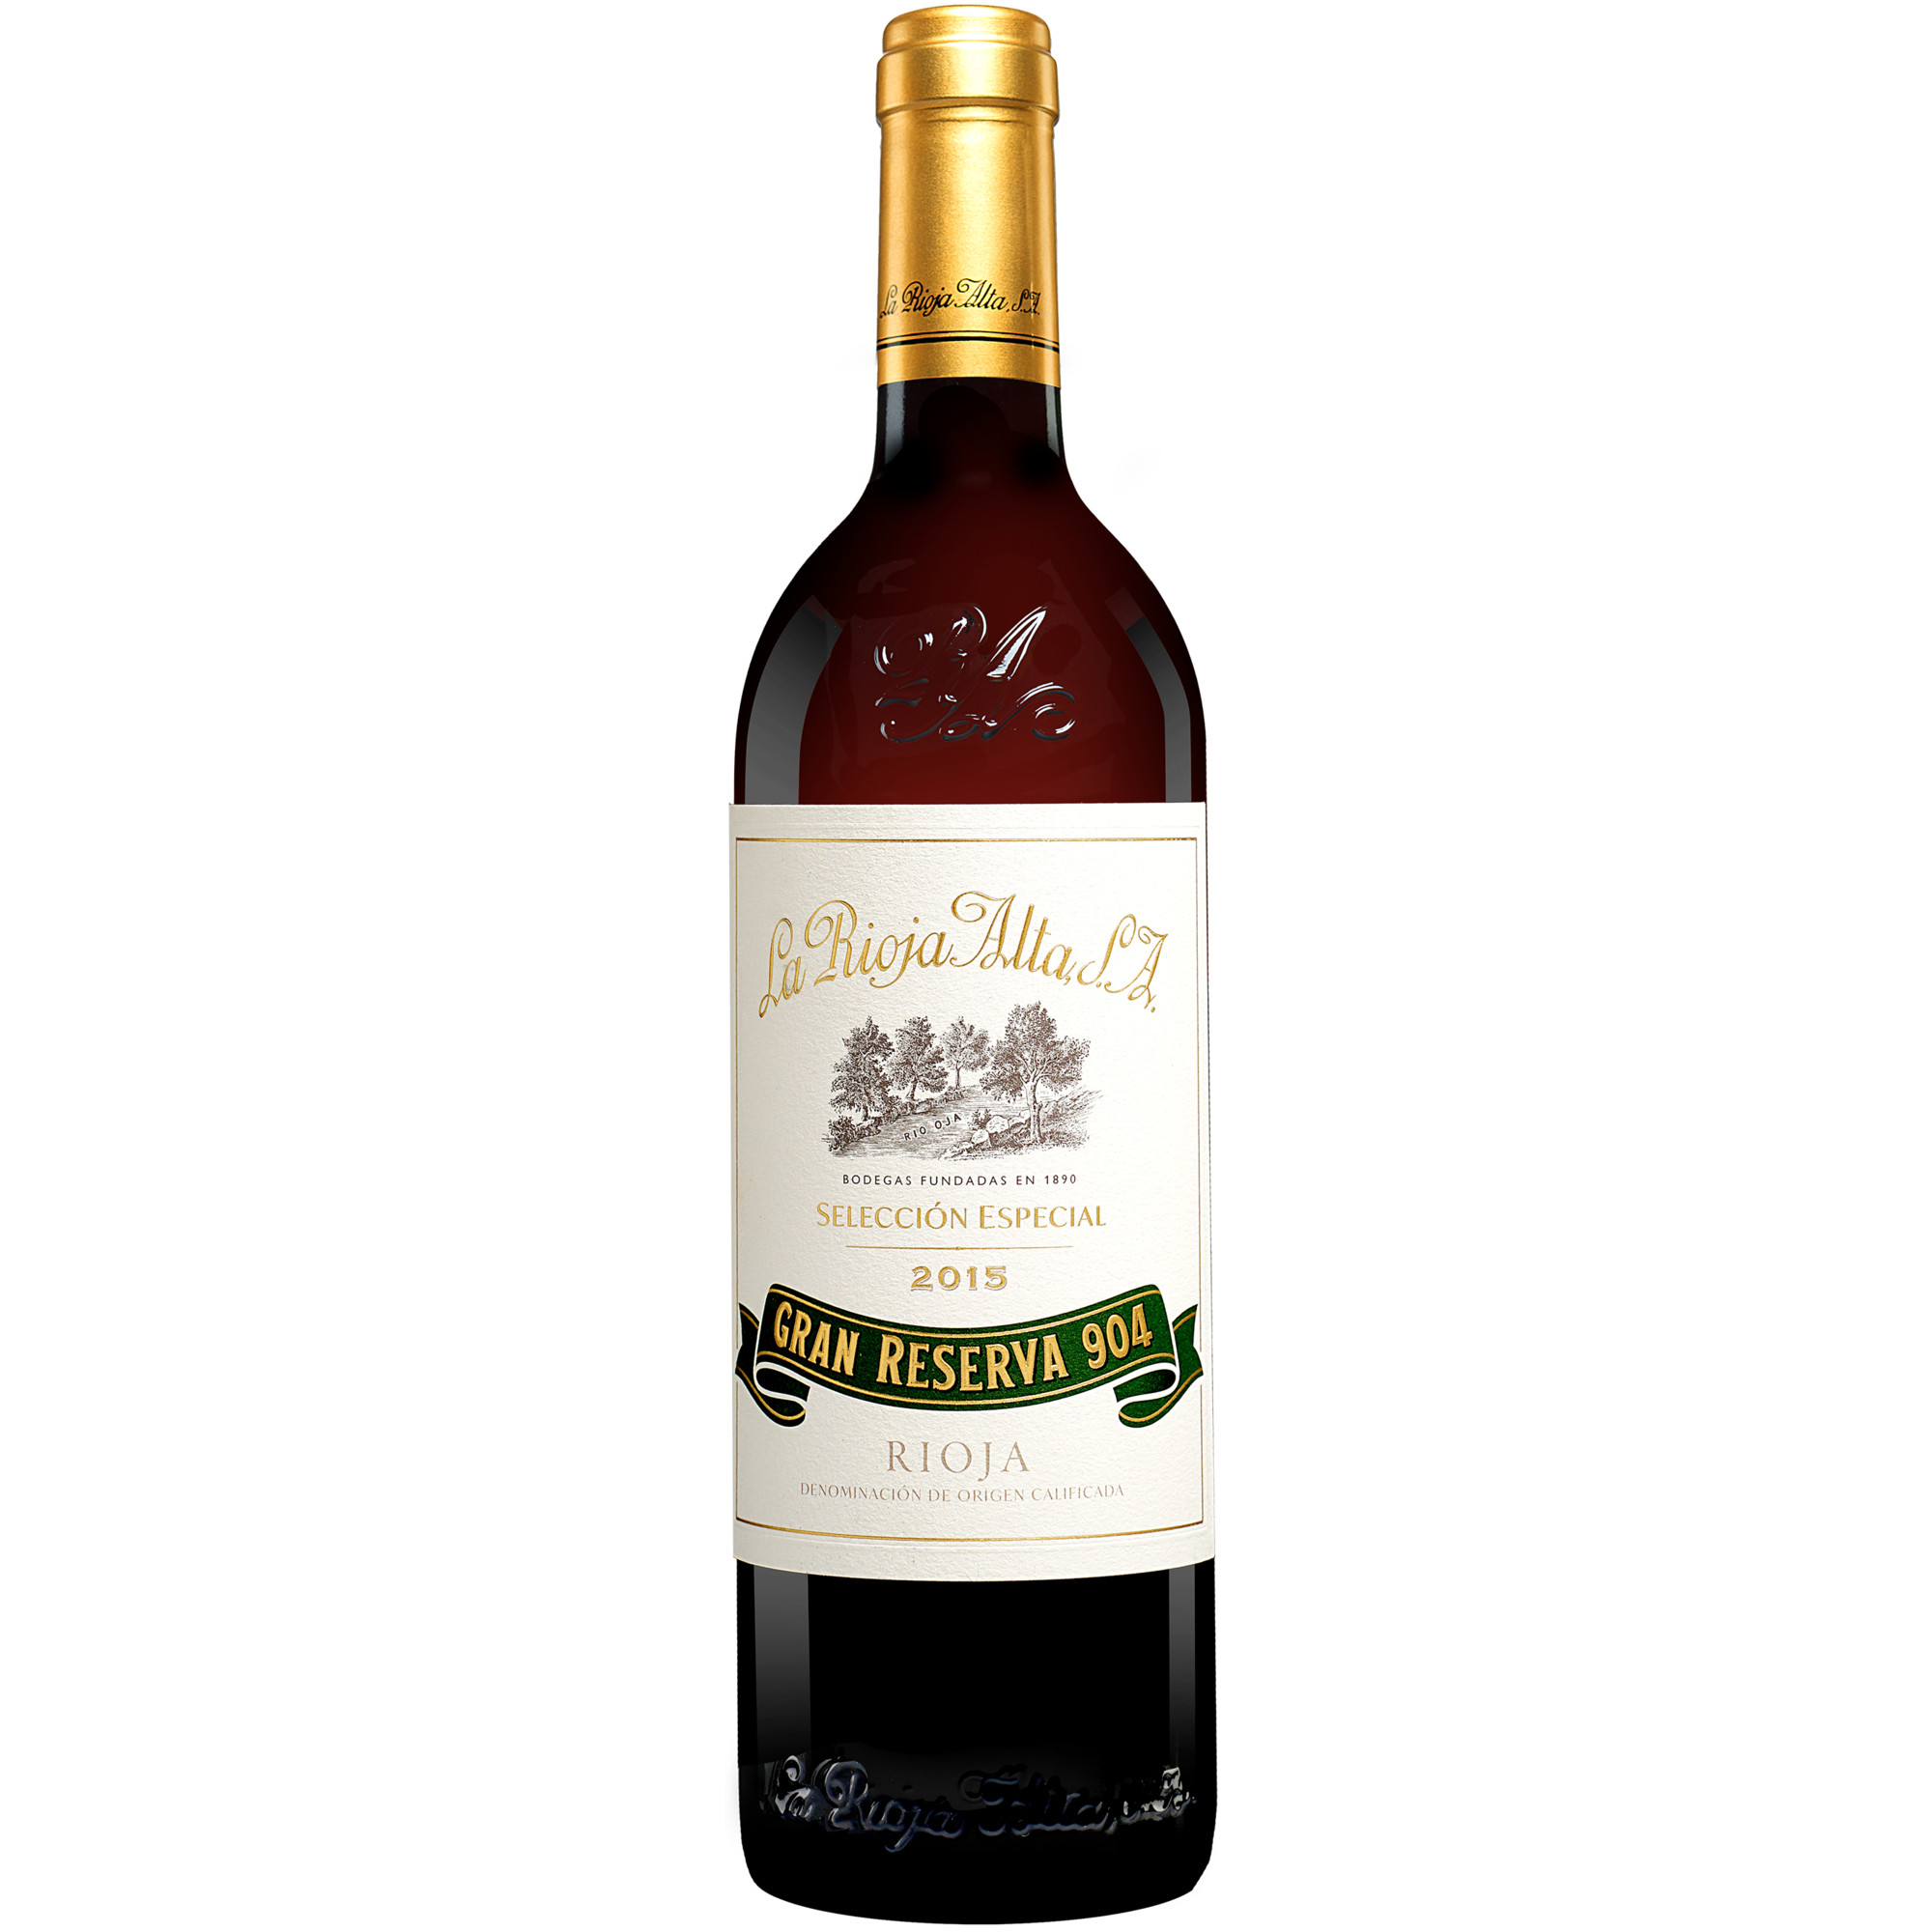 La Rioja Alta »904« Gran Reserva 2015  014.5% Vol. Rotwein Trocken aus Spanien